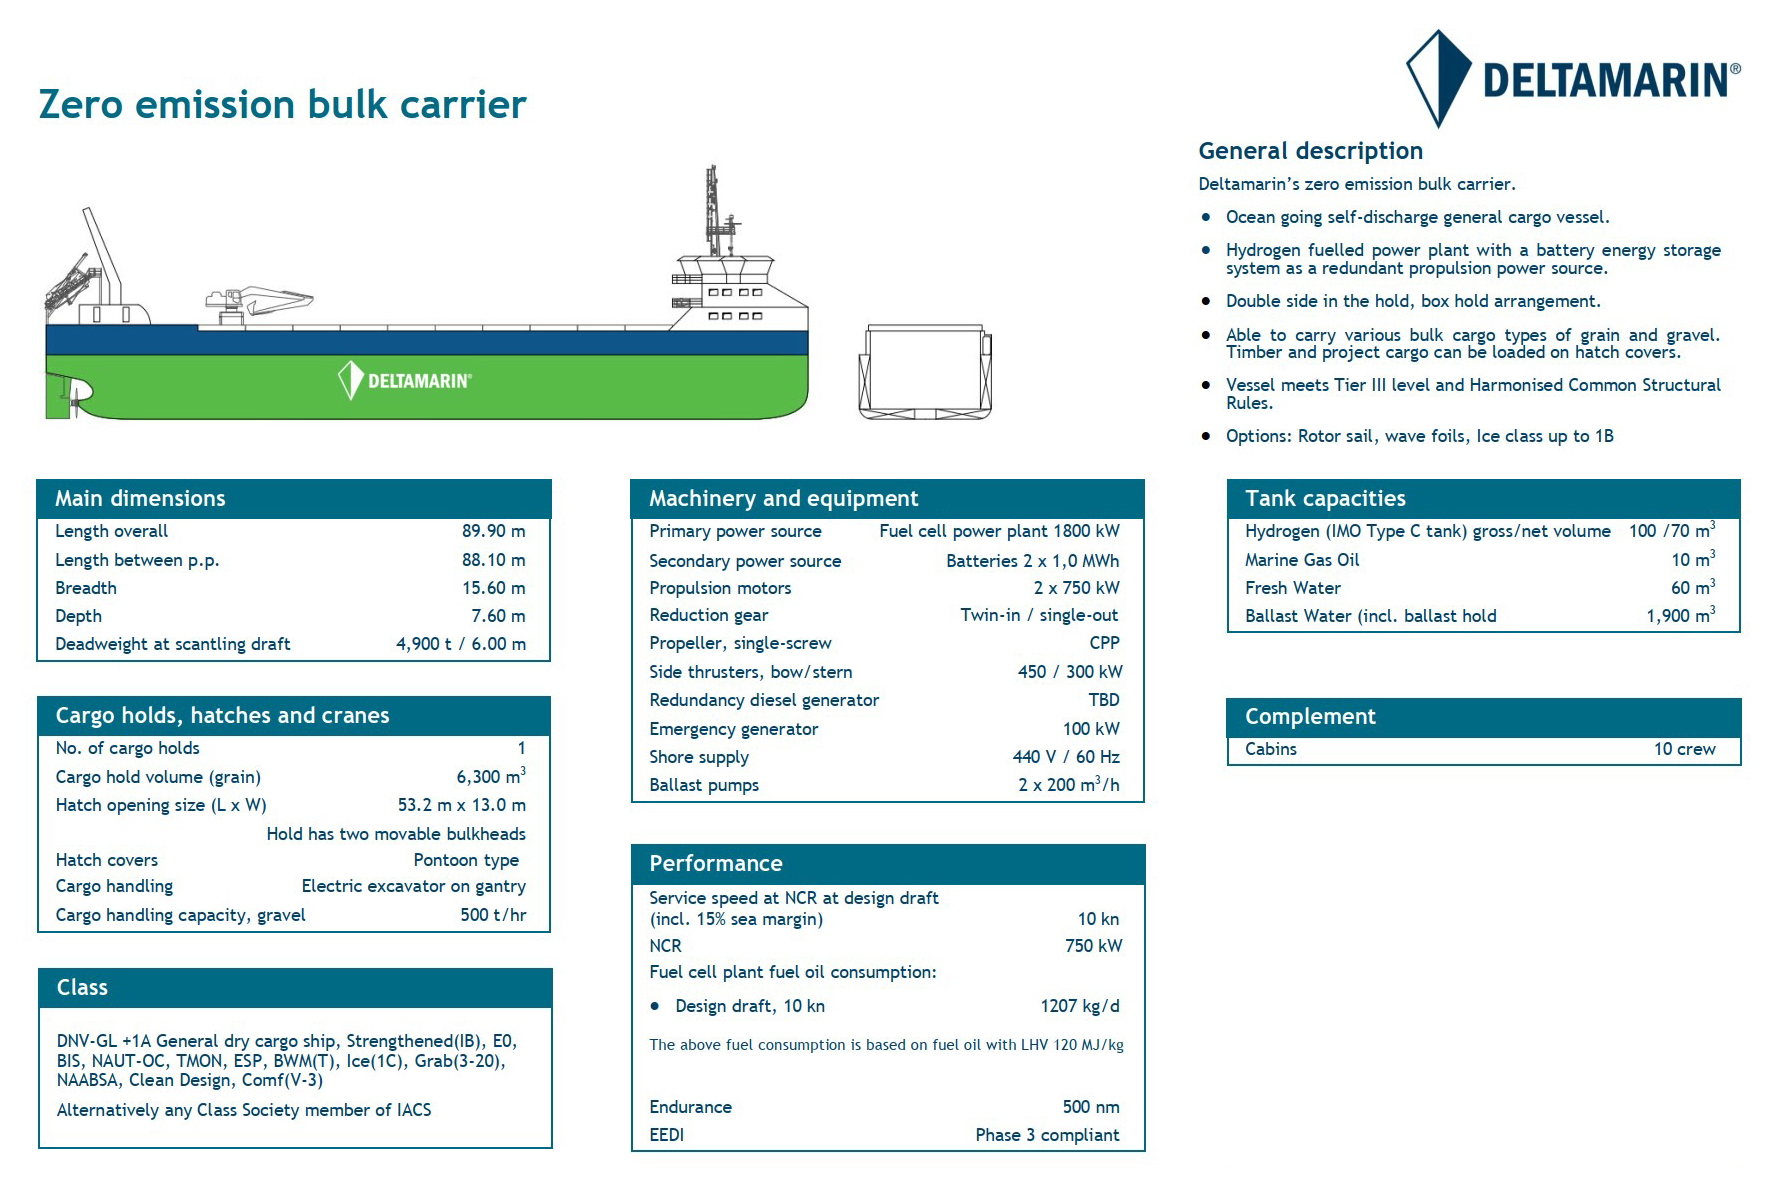 Technical data sheet of the zero-emission cargo ship